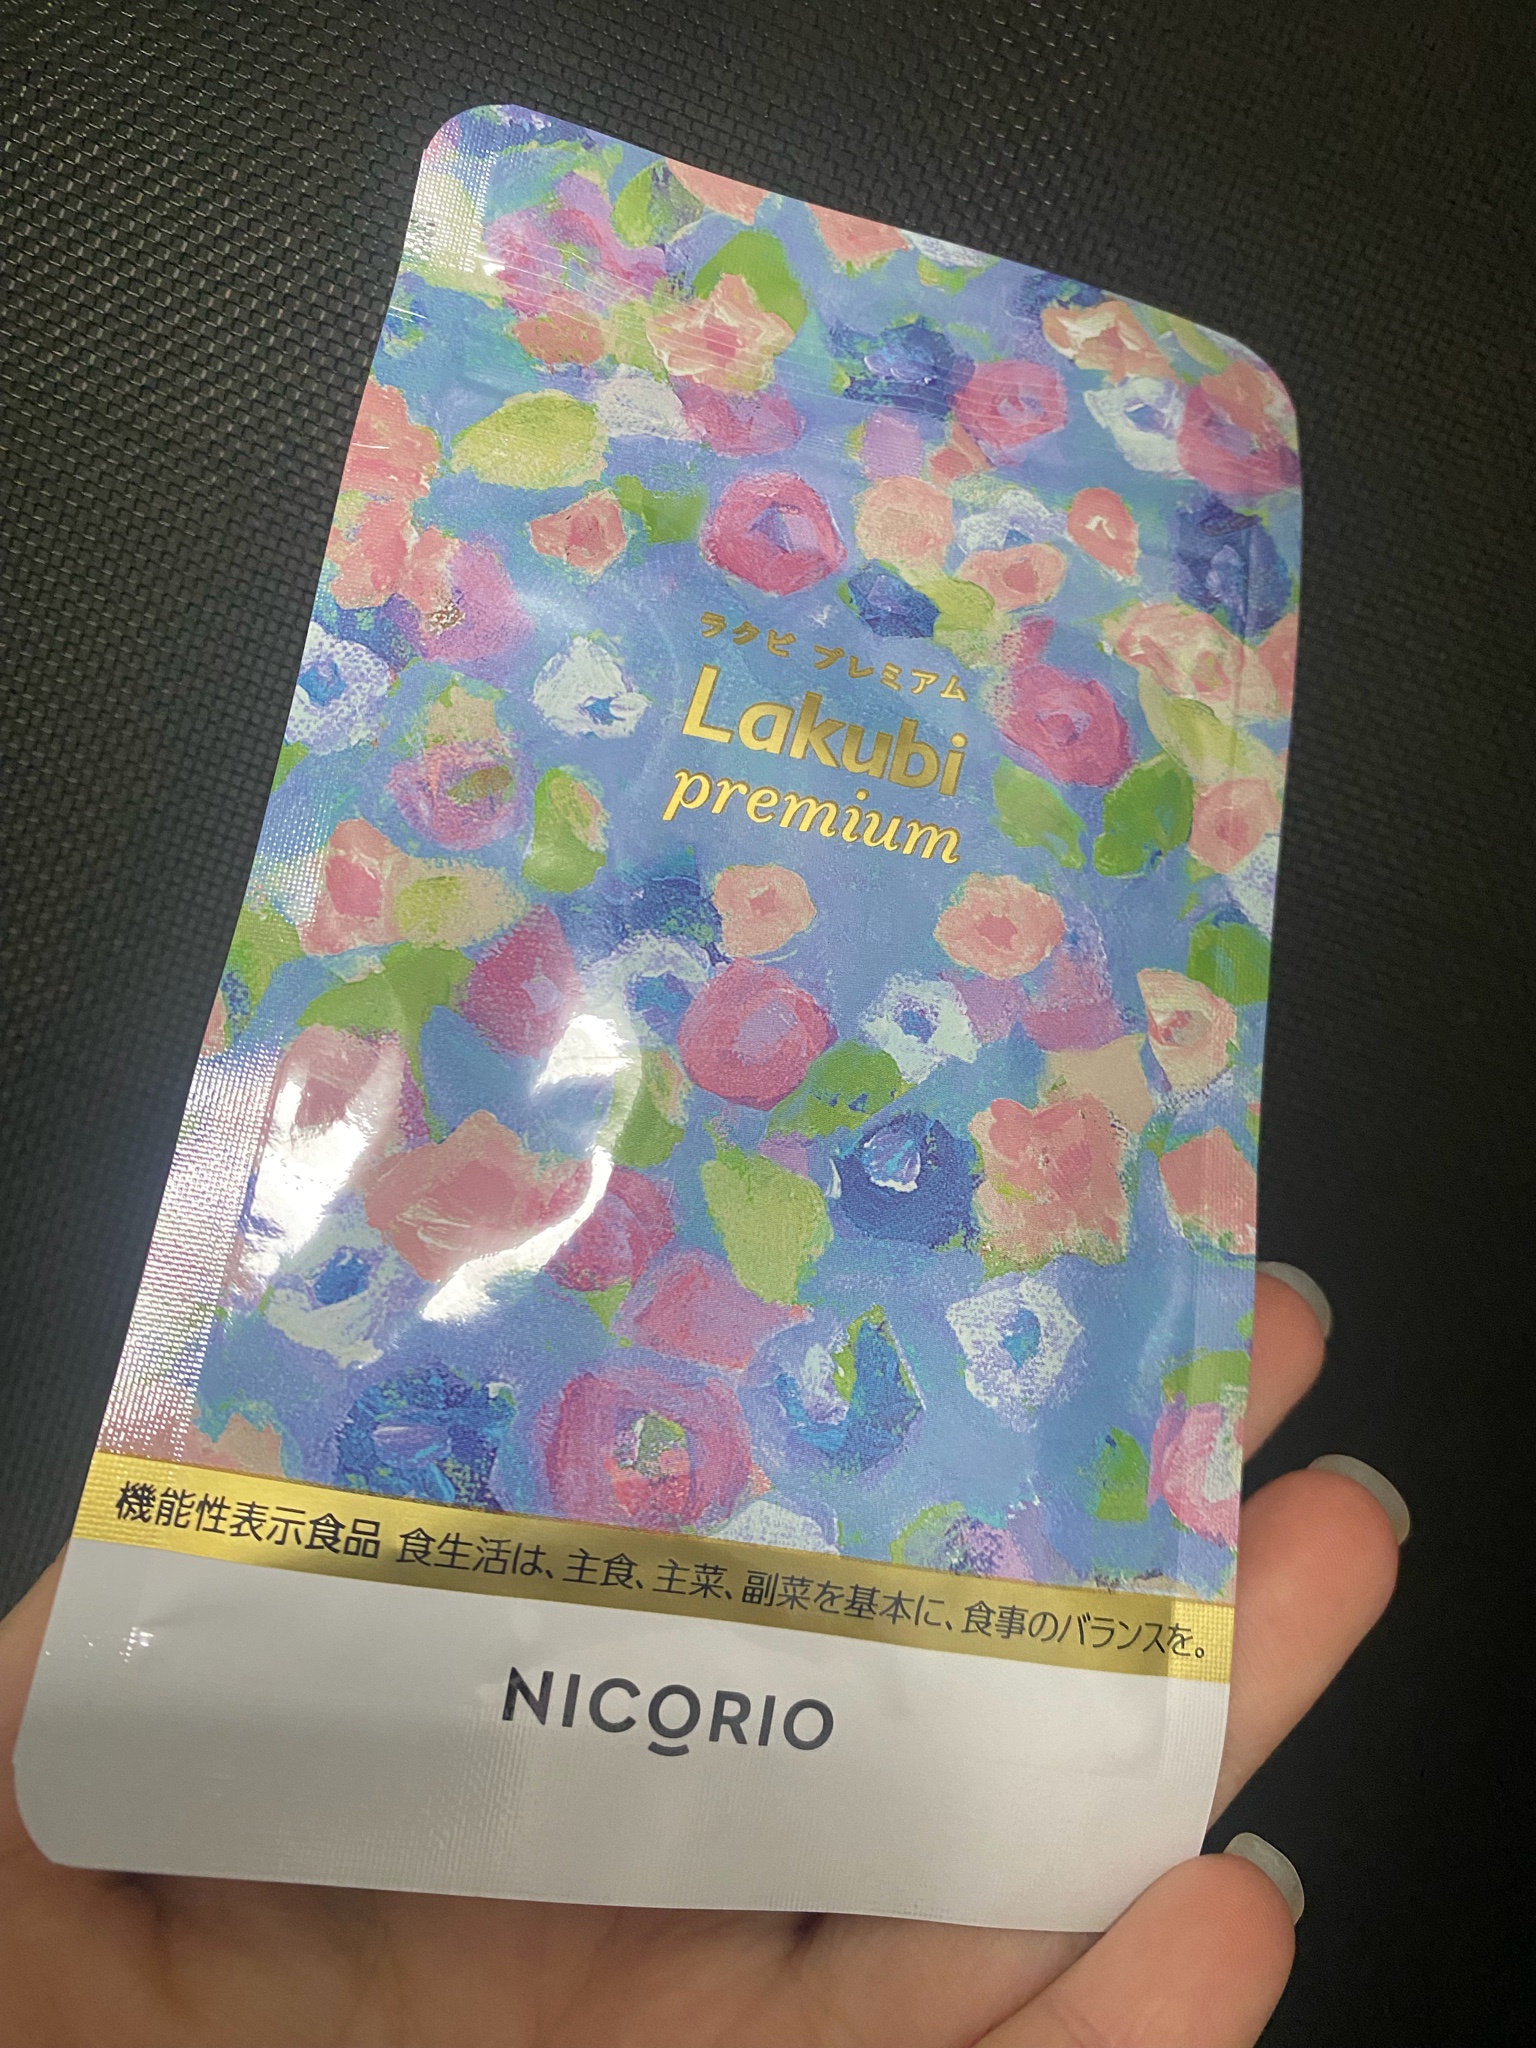 NICORIO（ニコリオ） / Lakubi premium(ラクビプレミアム)の公式商品